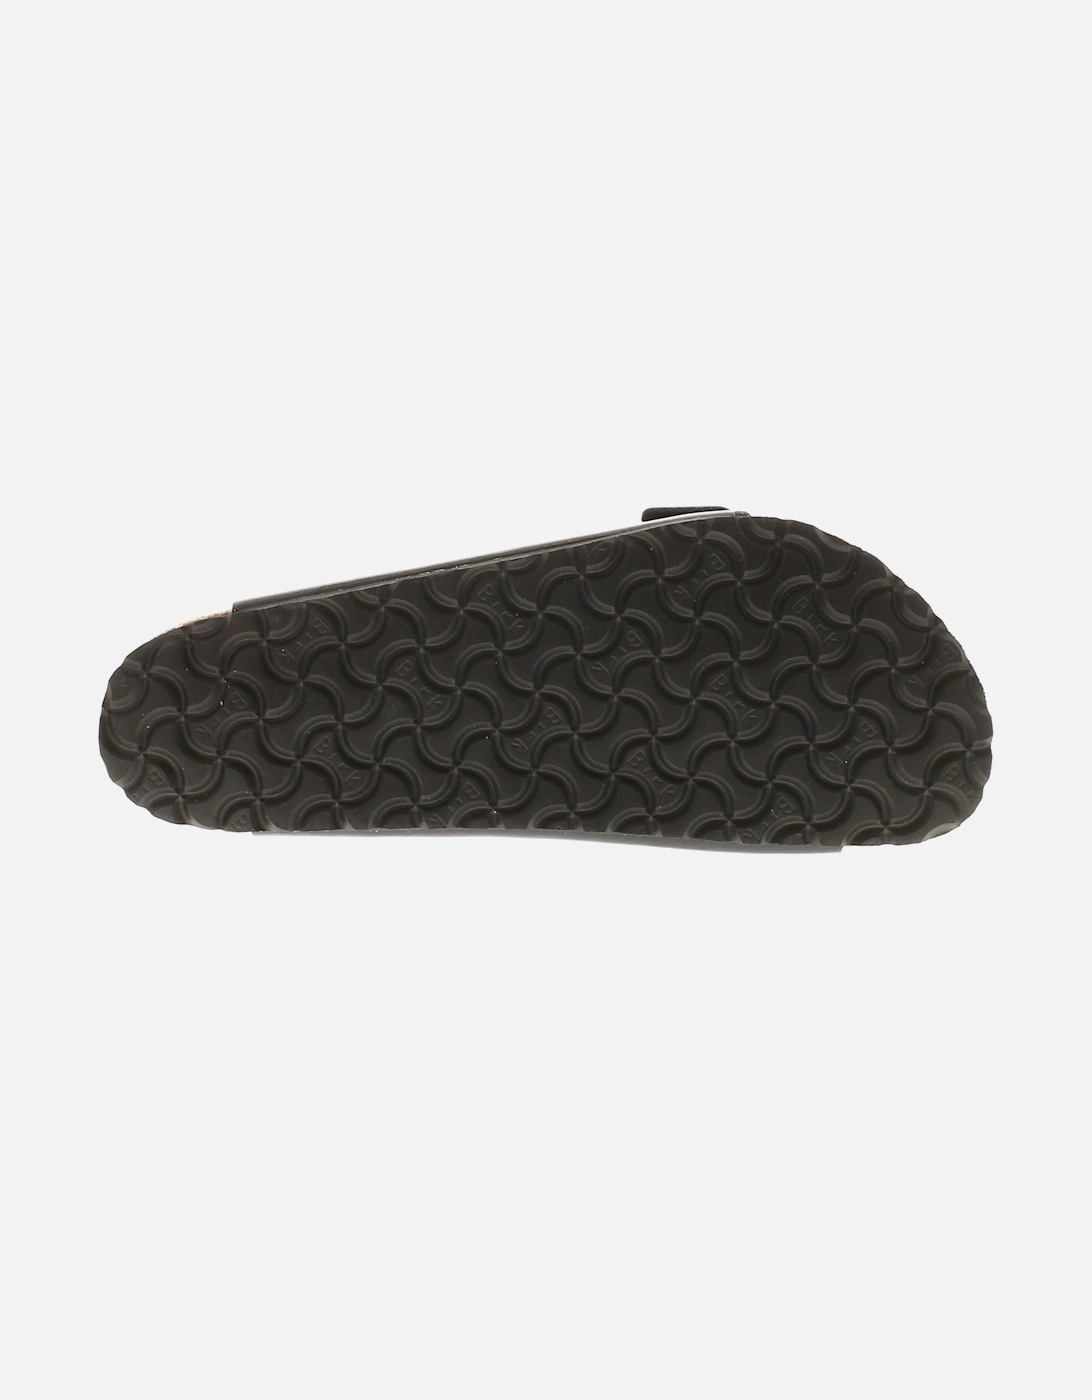 Birkenstock Unisex Flat Sandals Arizona Patent leather Buckle Fastening black UK